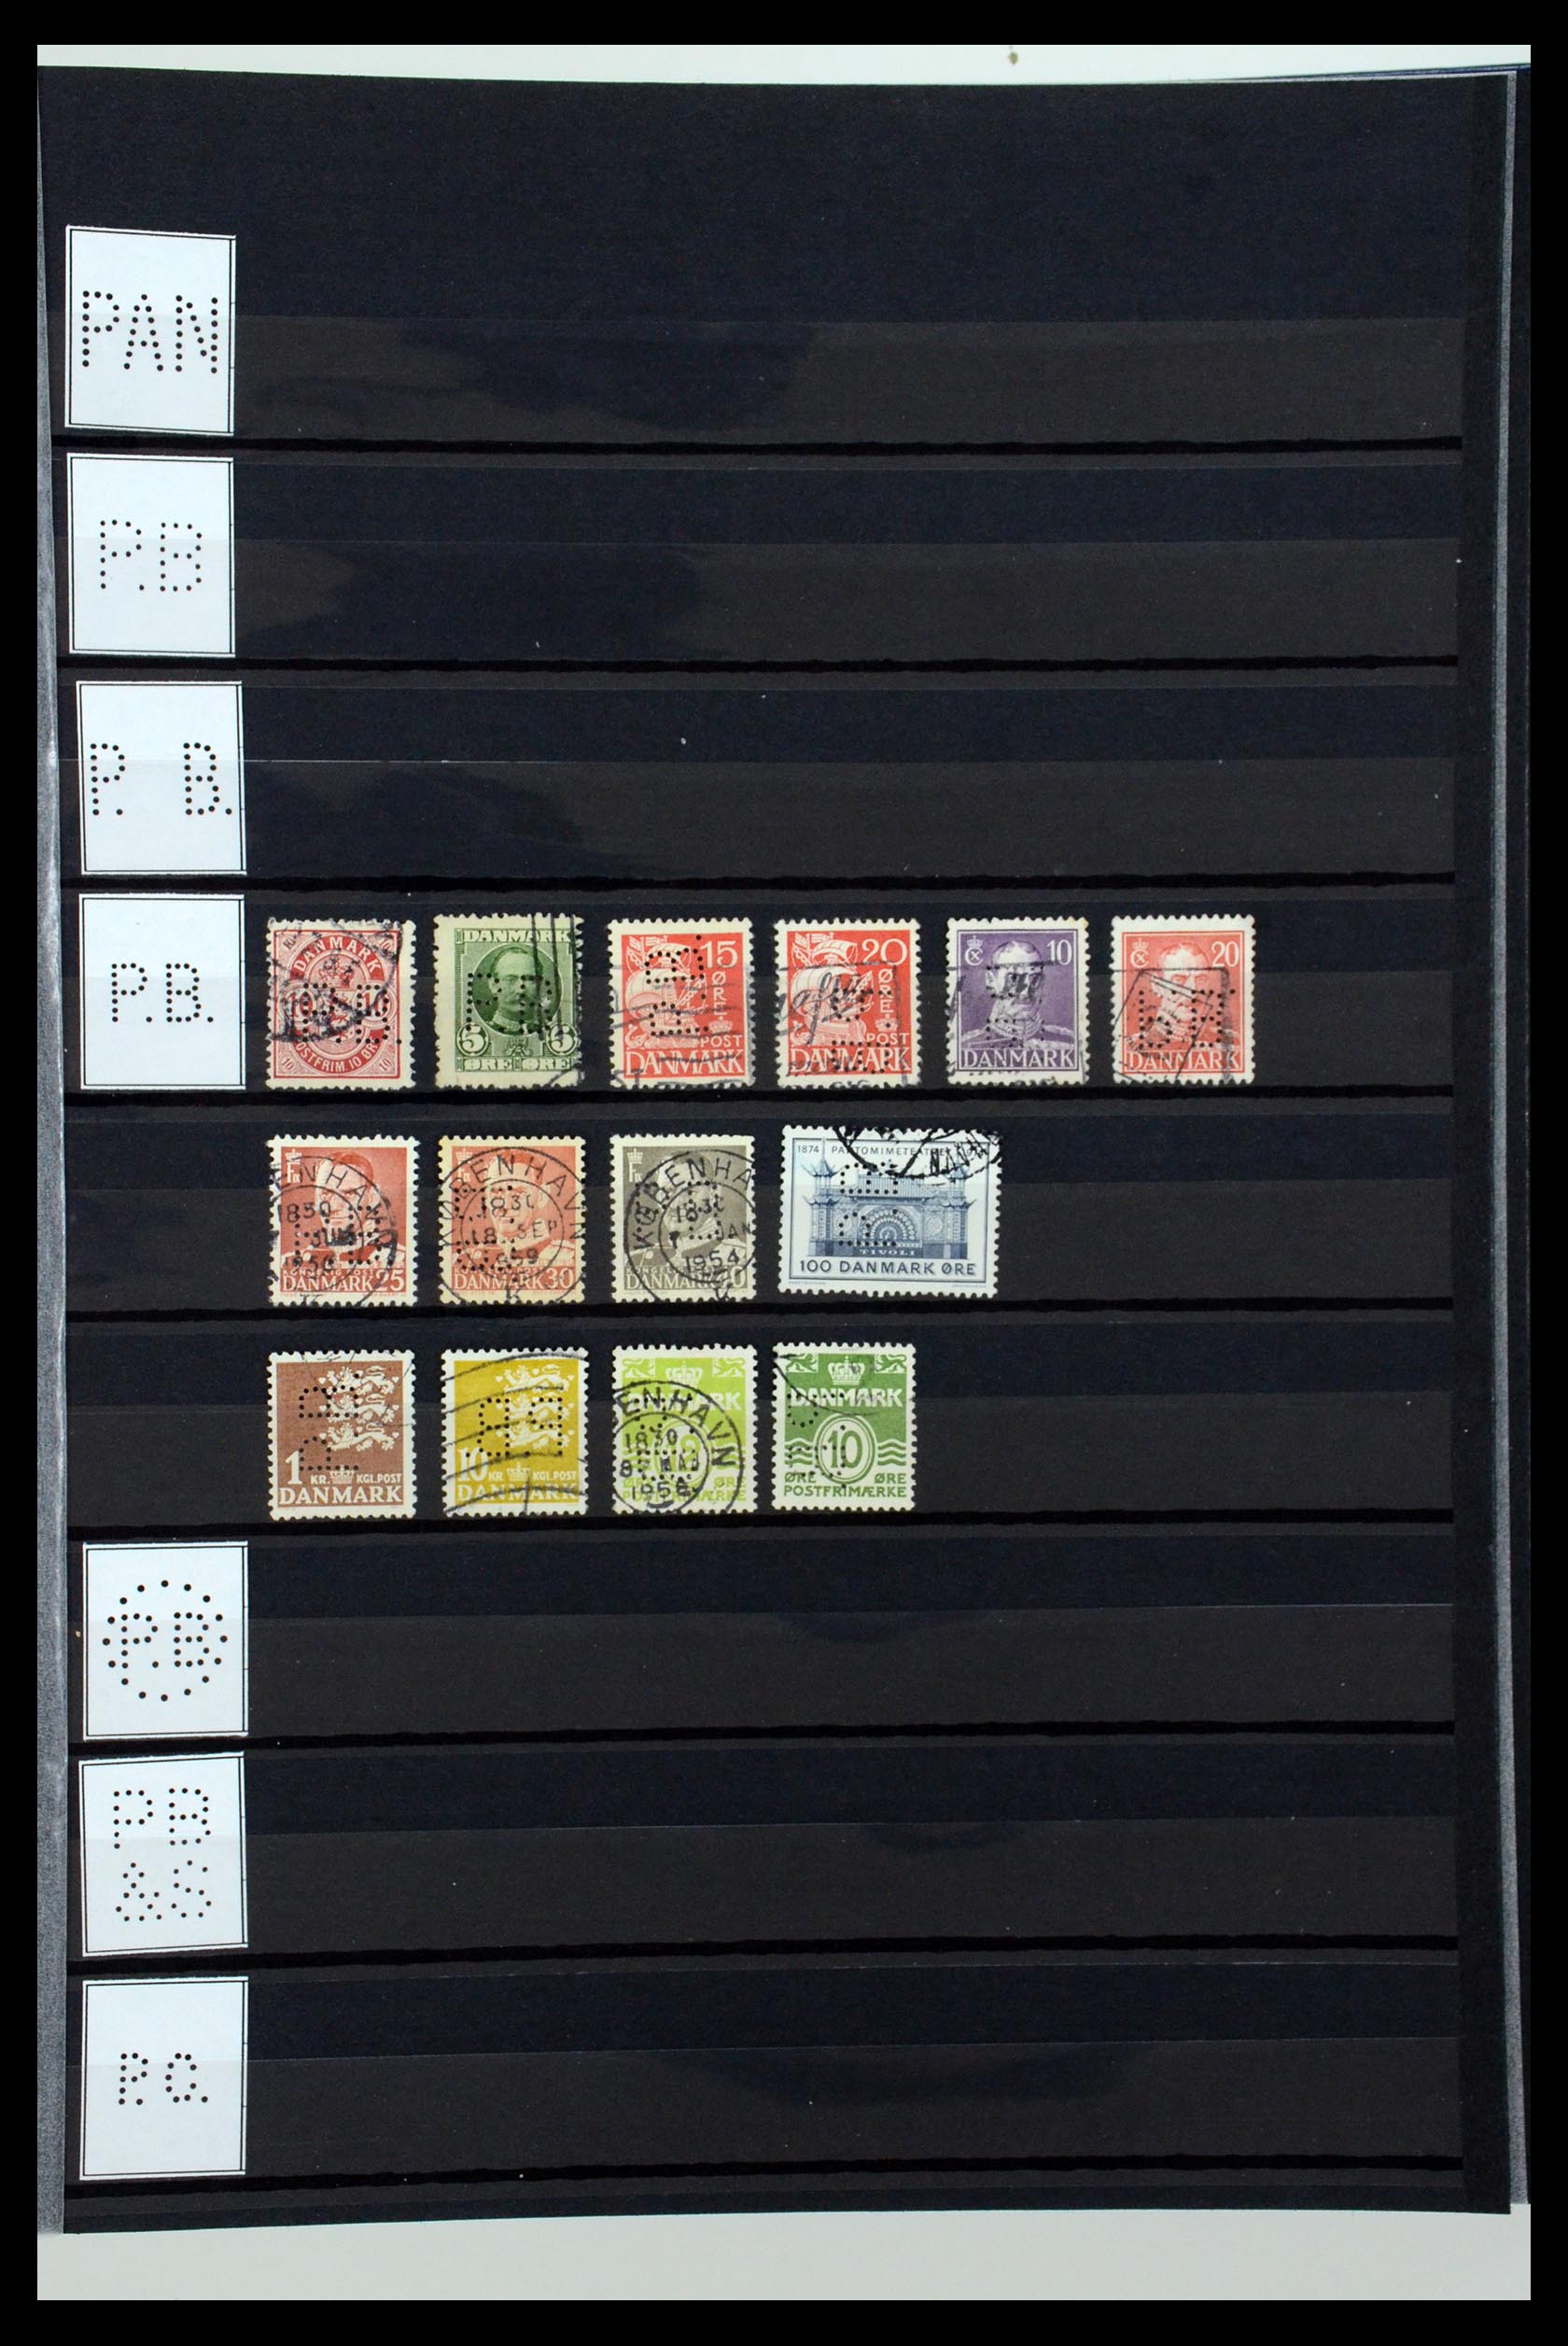 36396 190 - Stamp collection 36396 Denmark perfins.